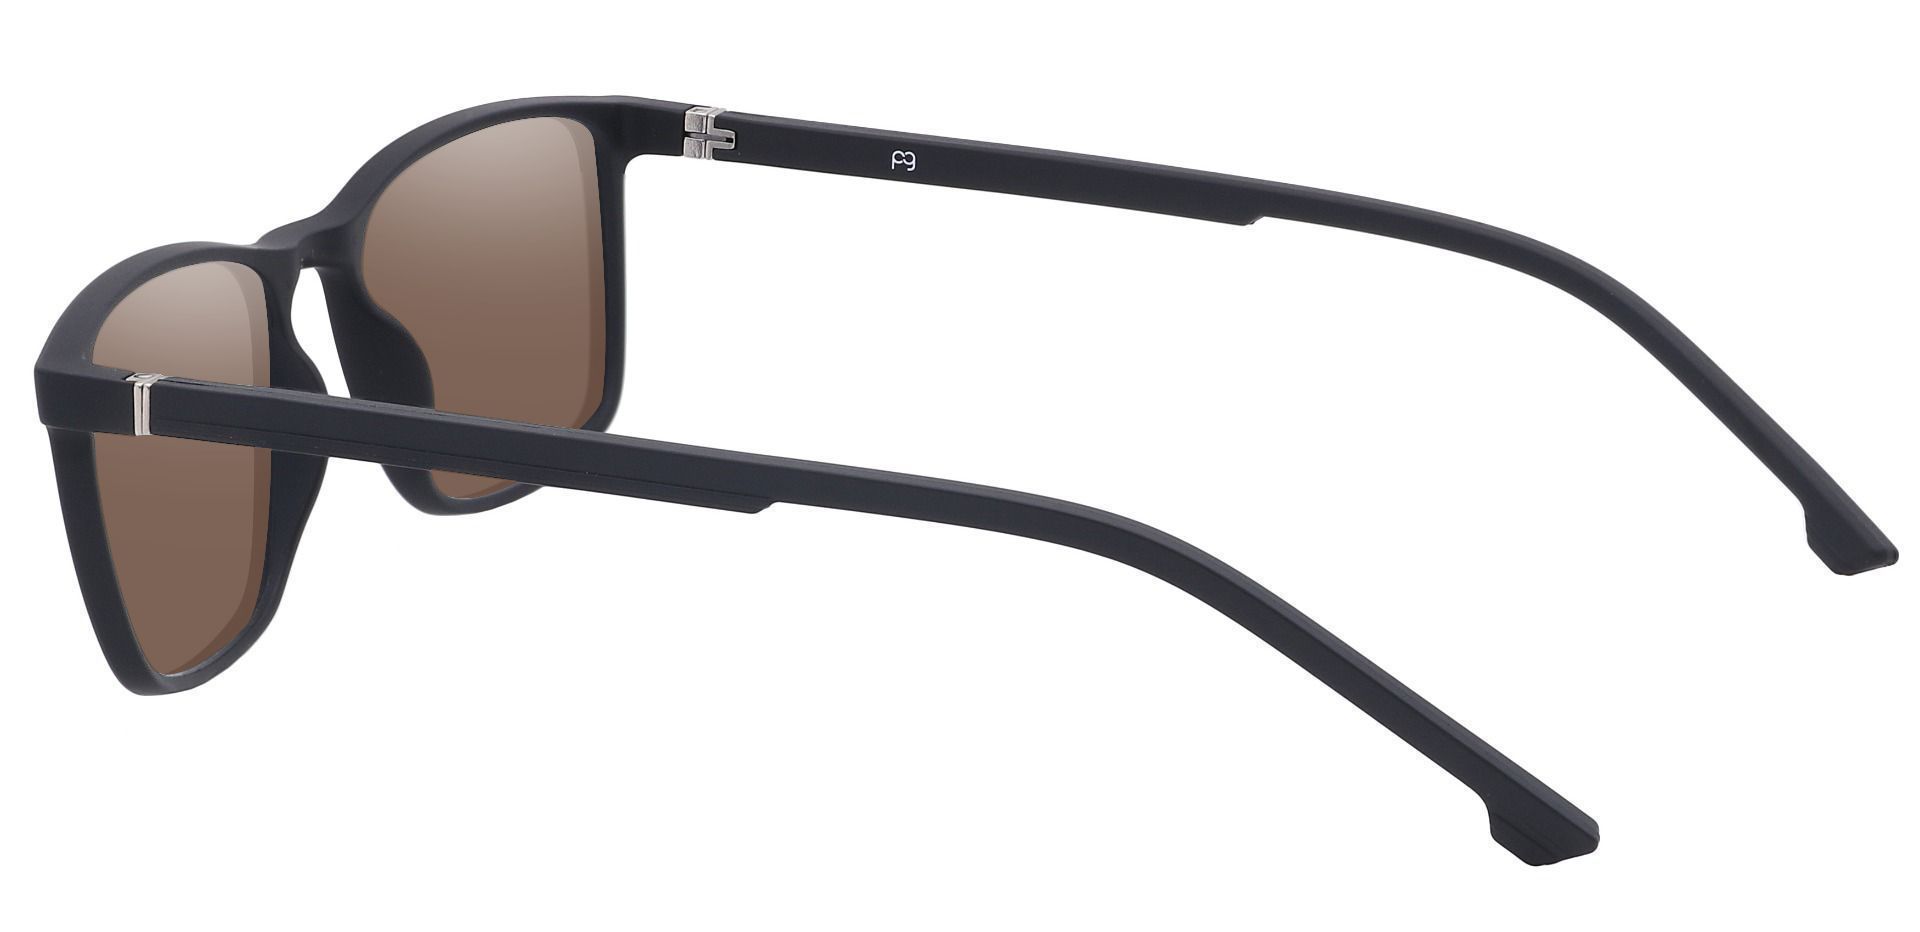 Franklin Rectangle Lined Bifocal Sunglasses - Black Frame With Brown Lenses